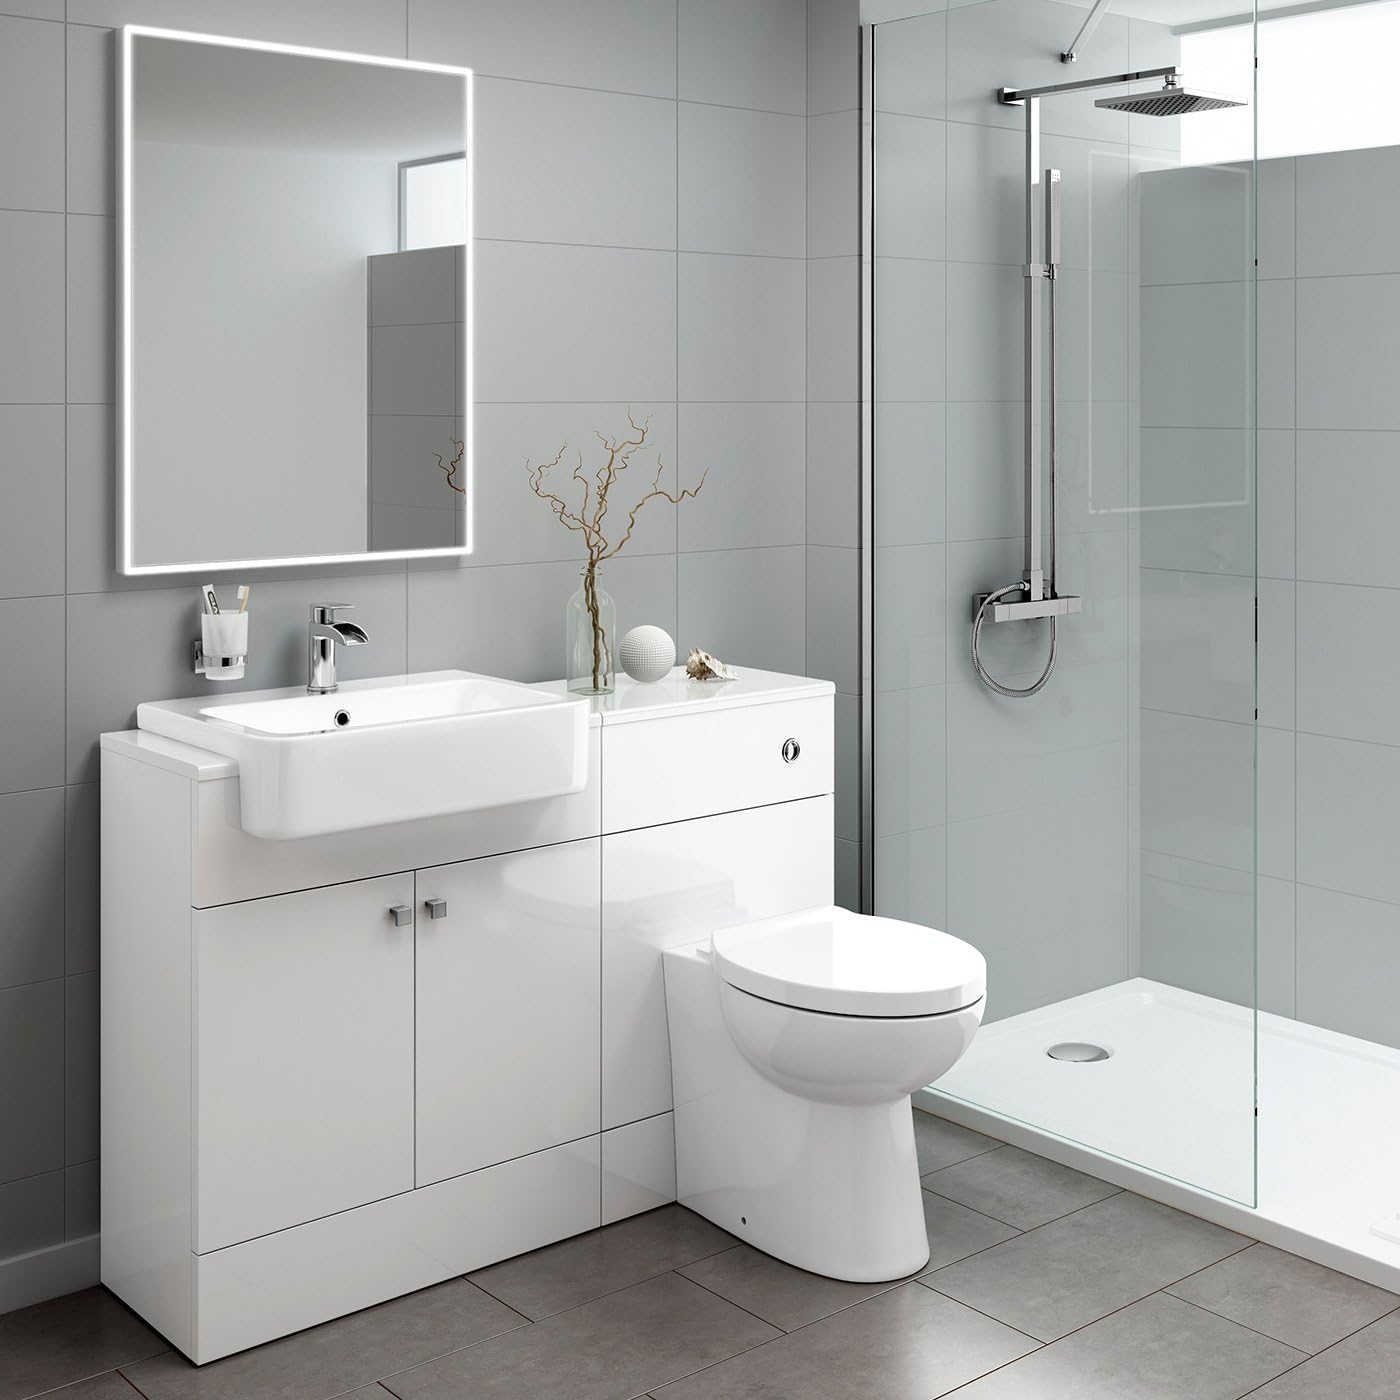 Harper Floor Standing Bathroom Suite with Standard Toilet - Elegant design, water-efficient, easy installation, and modern bathroom upgrade solution.